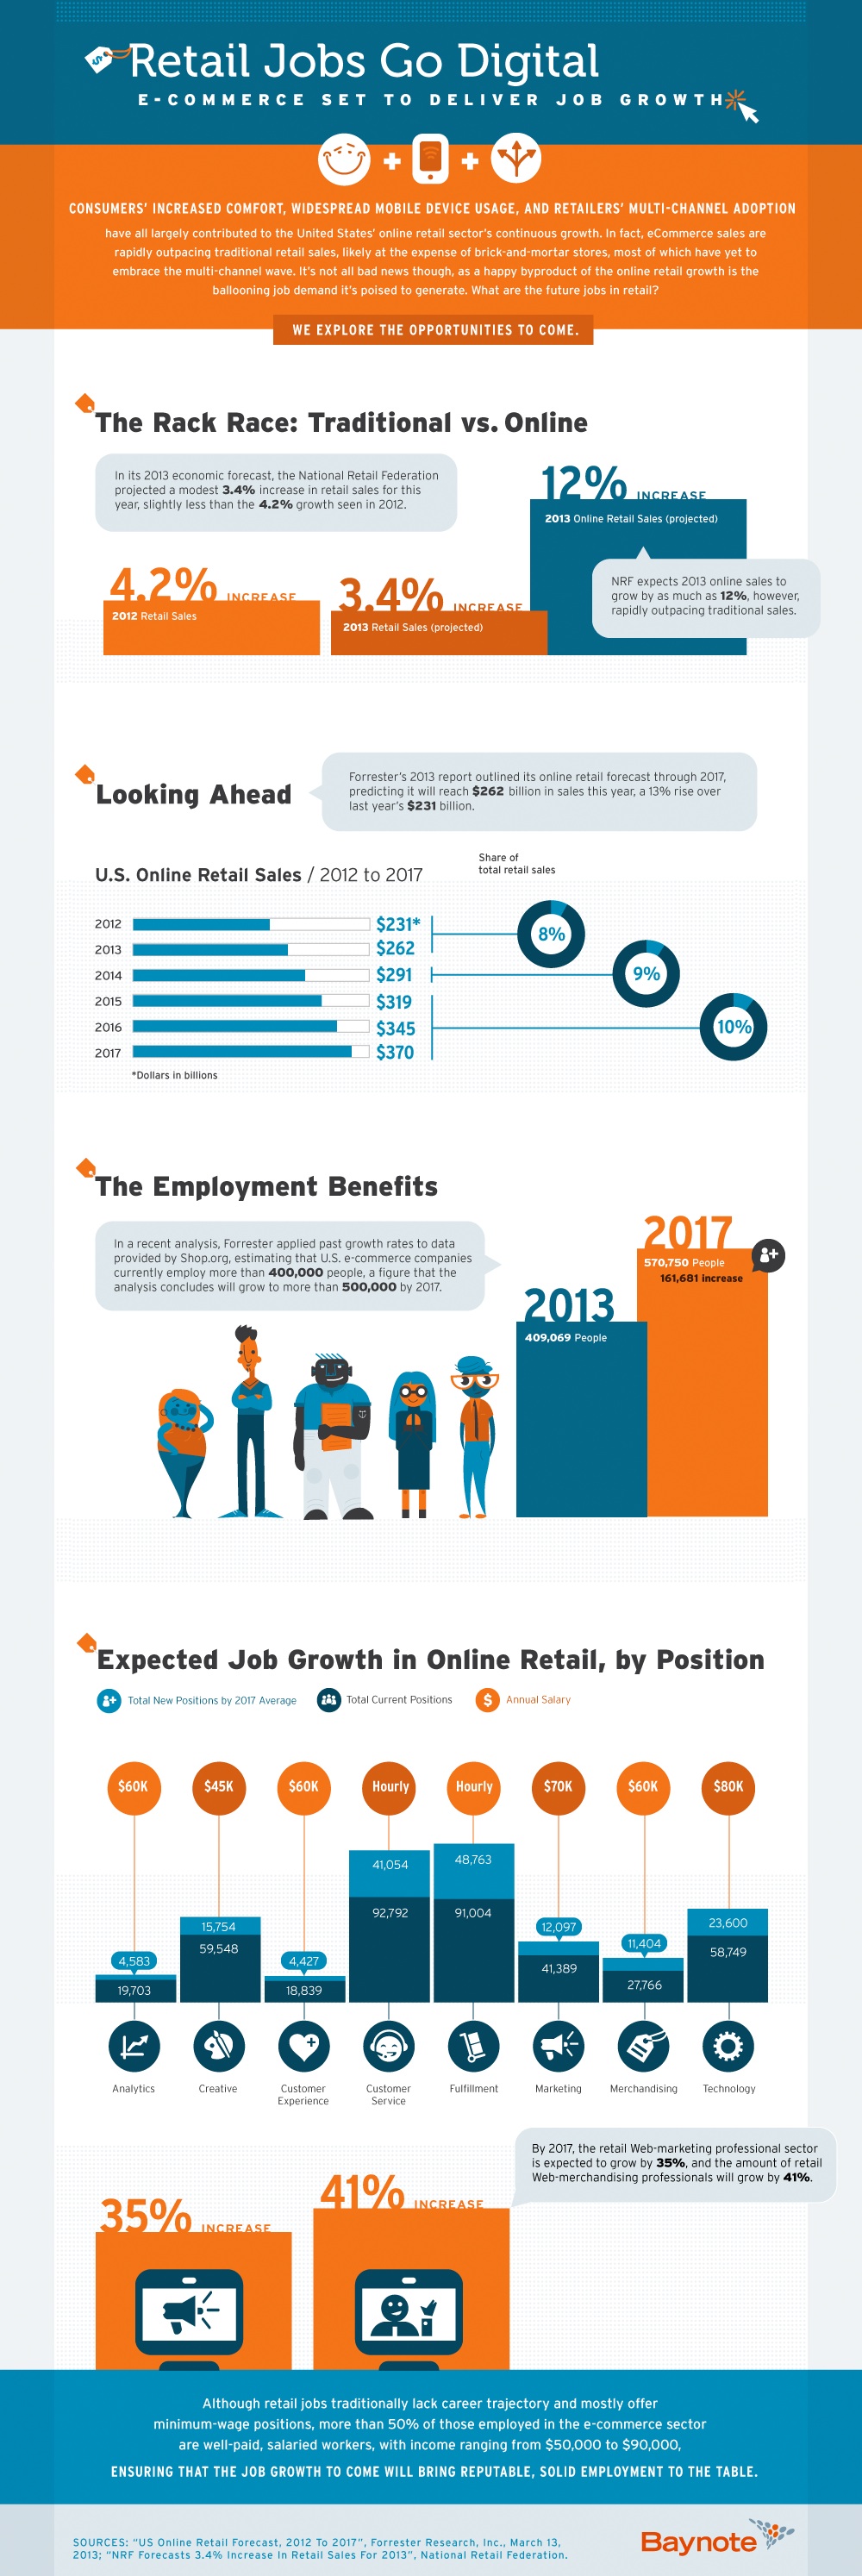 Baynote Retail Jobs Go Digital